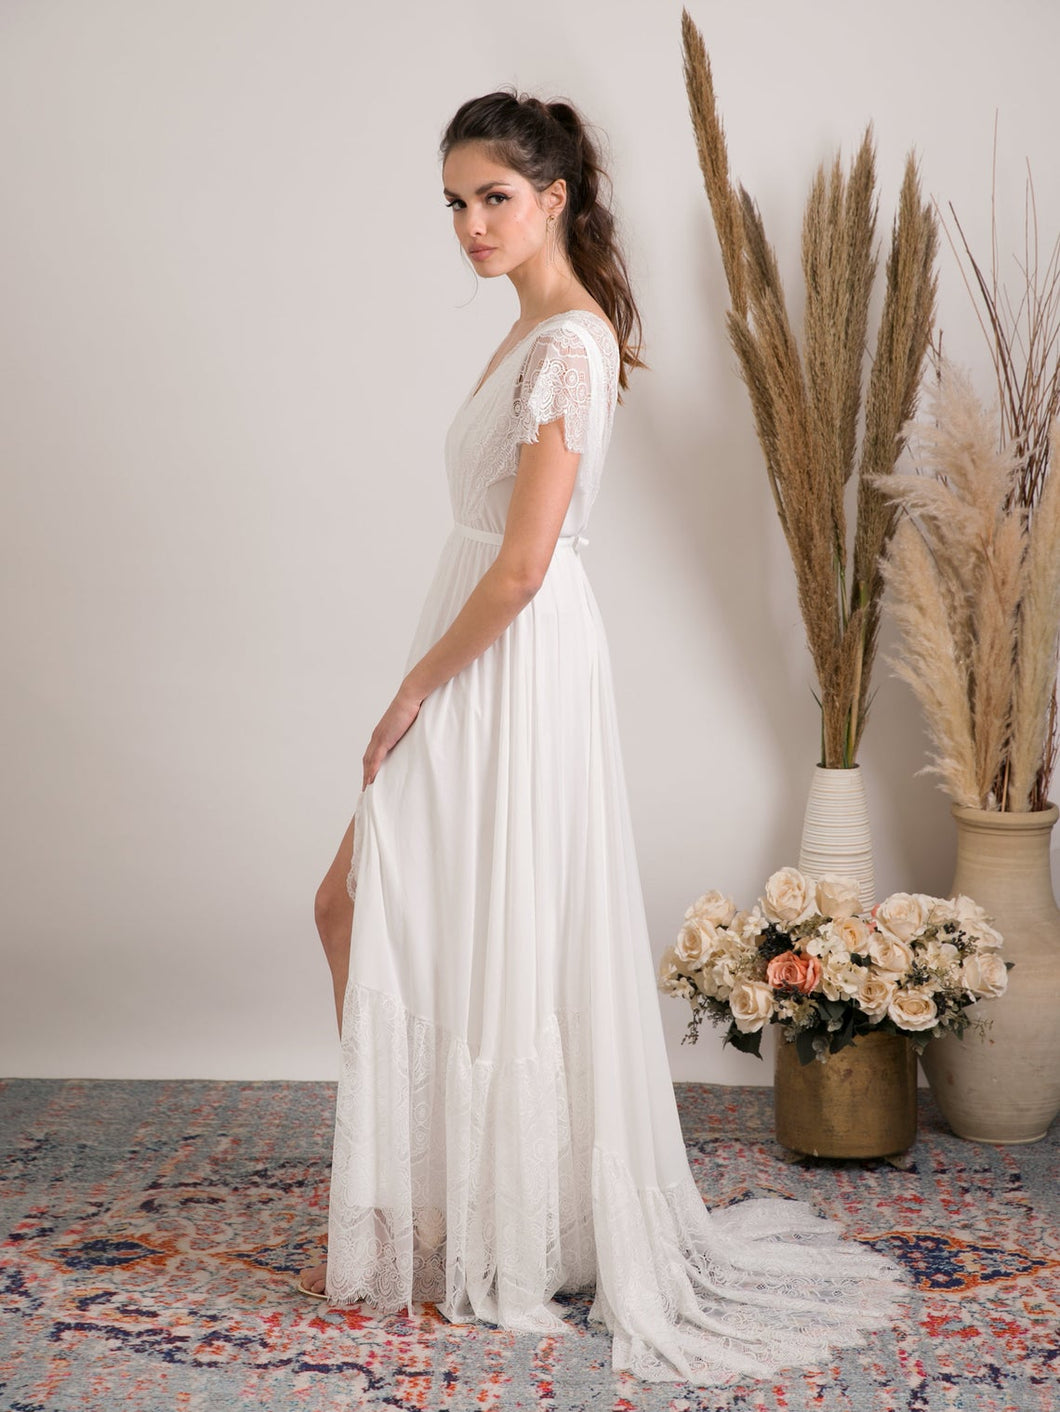 Boho Wedding Dresses & Gowns - Largest Collection - Kleinfeld | Kleinfeld  Bridal